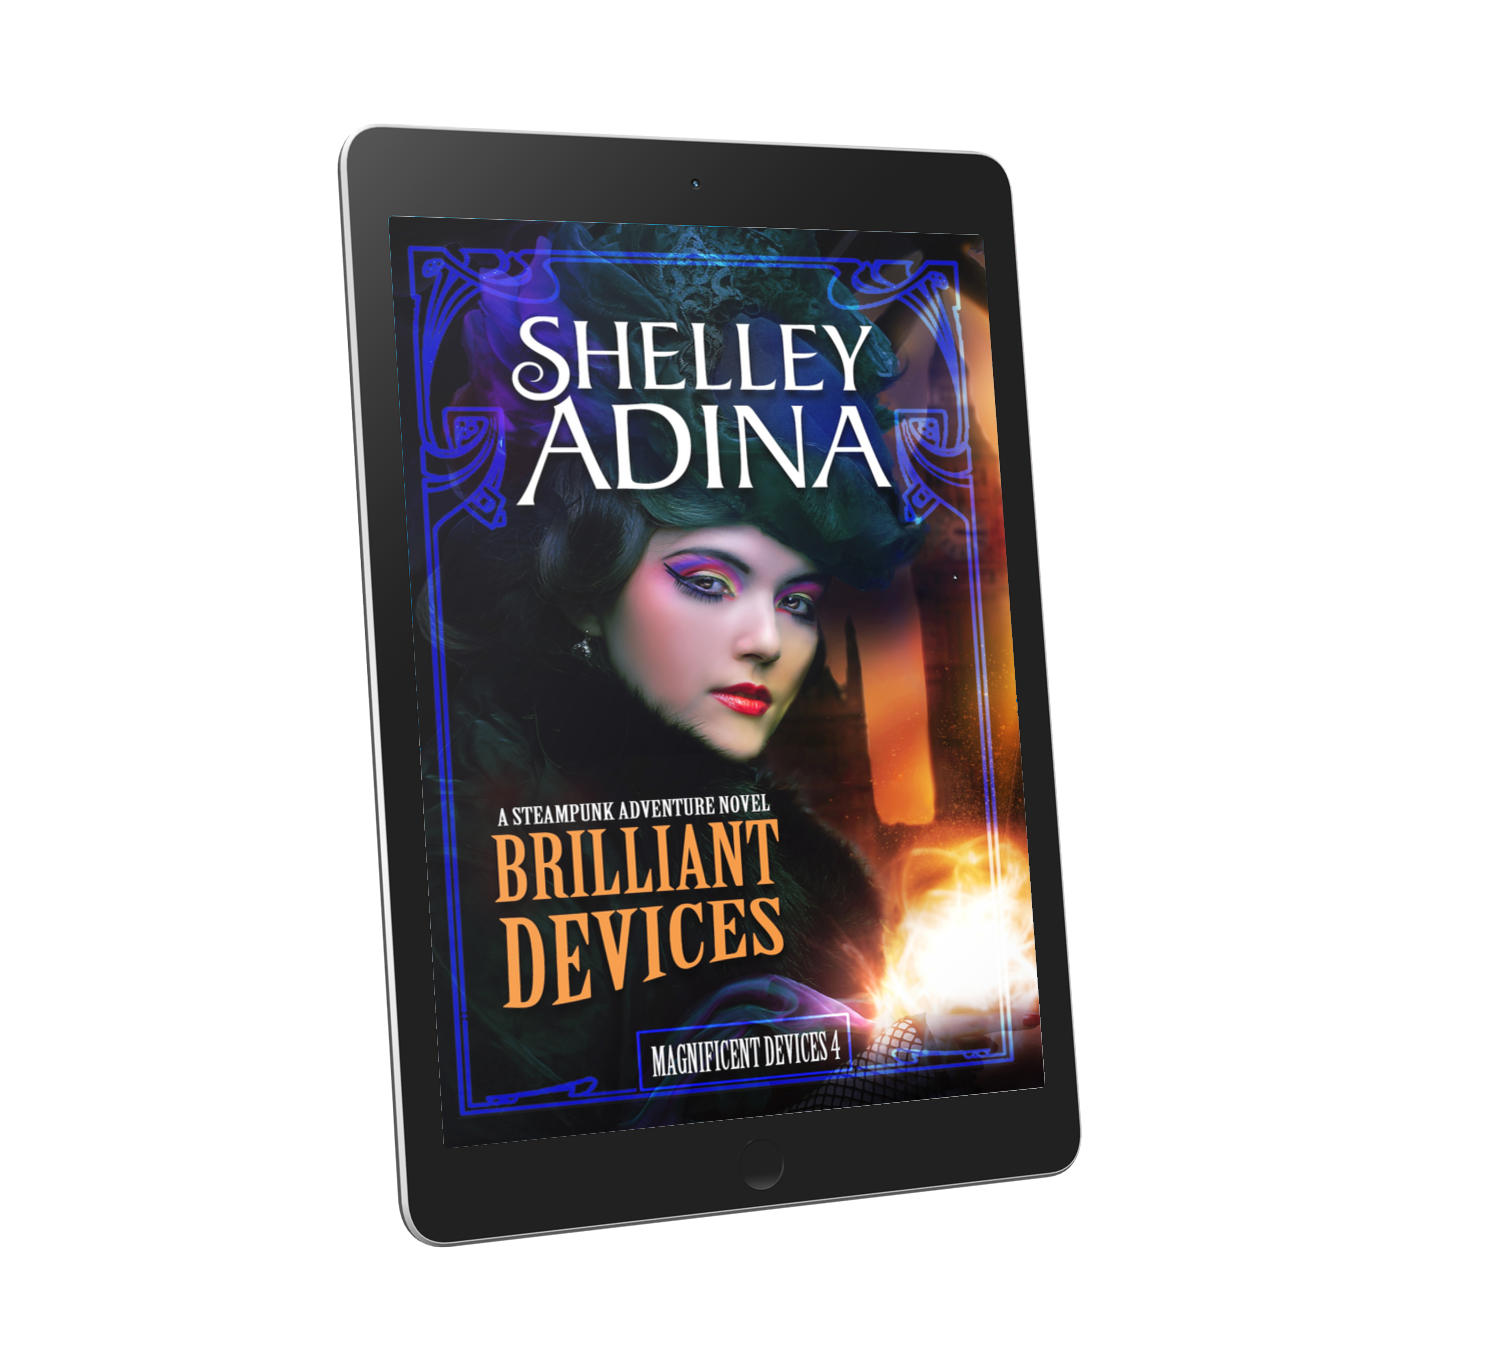 Brilliant Devices, a steampunk adventure novel by Shelley Adina